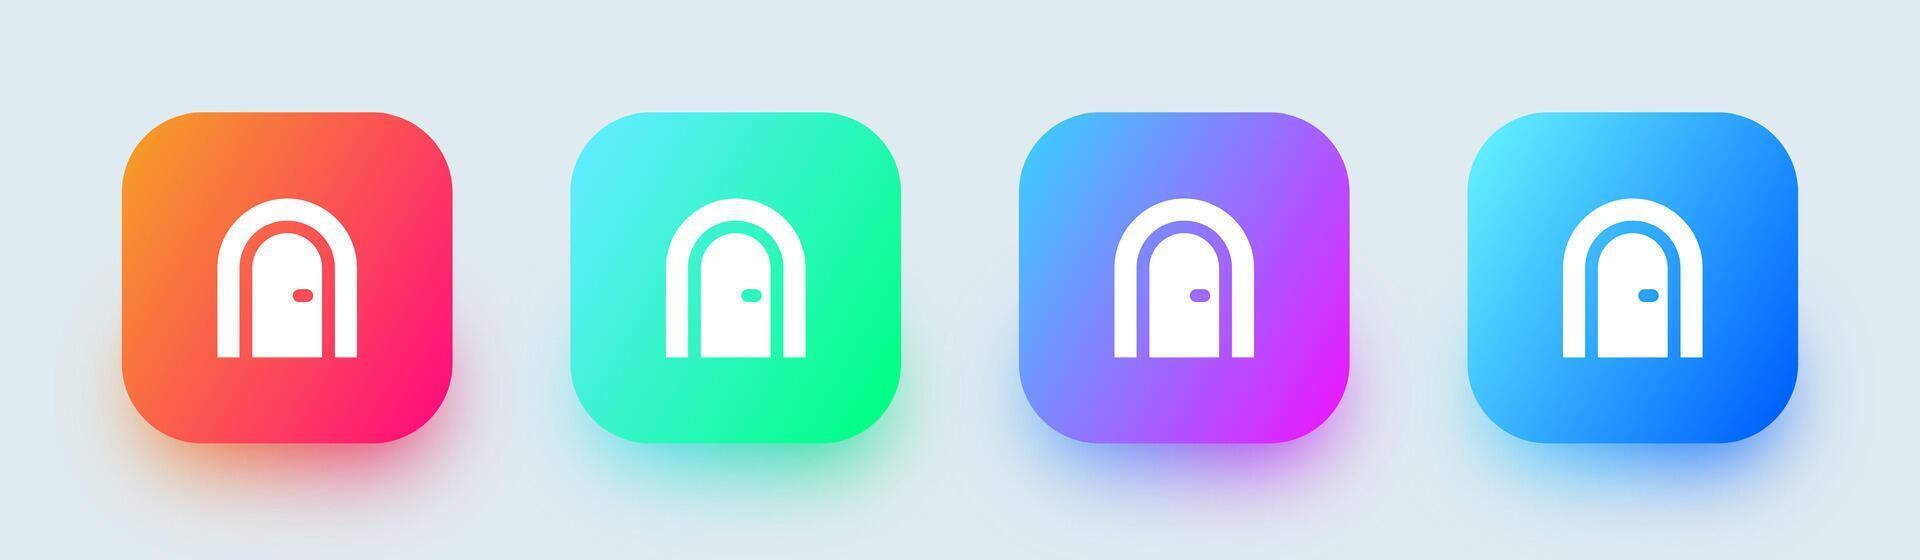 Door solid icon in square gradient colors. Doorway signs vector illustration.